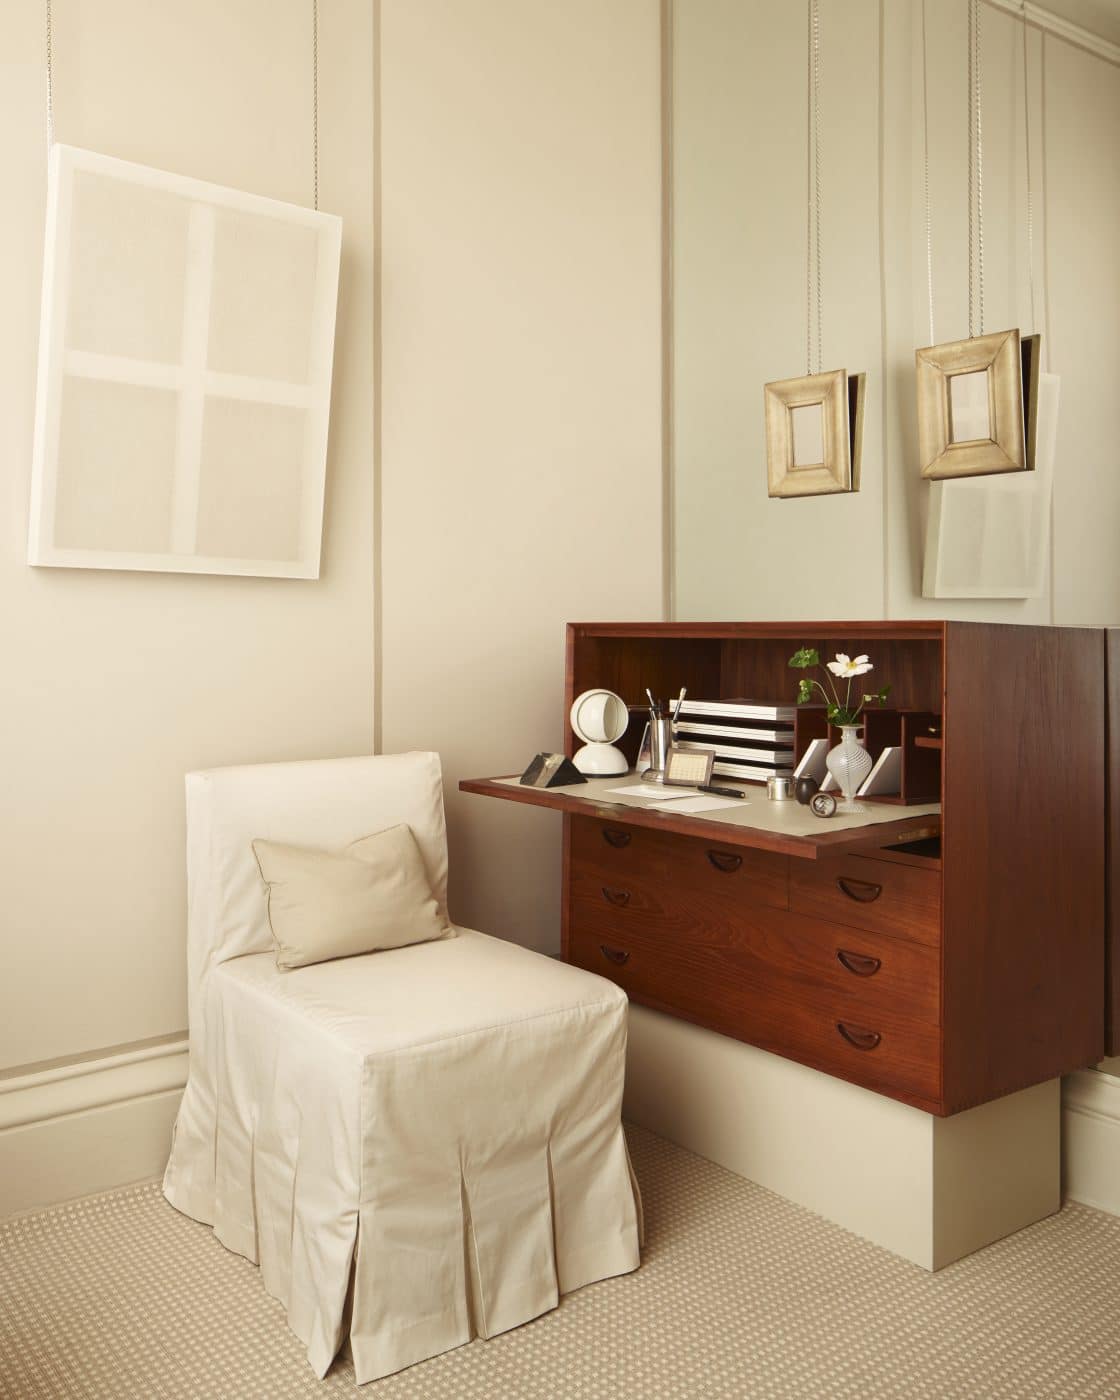 Neutral Brooklyn bedroom designed by Studio Dorion